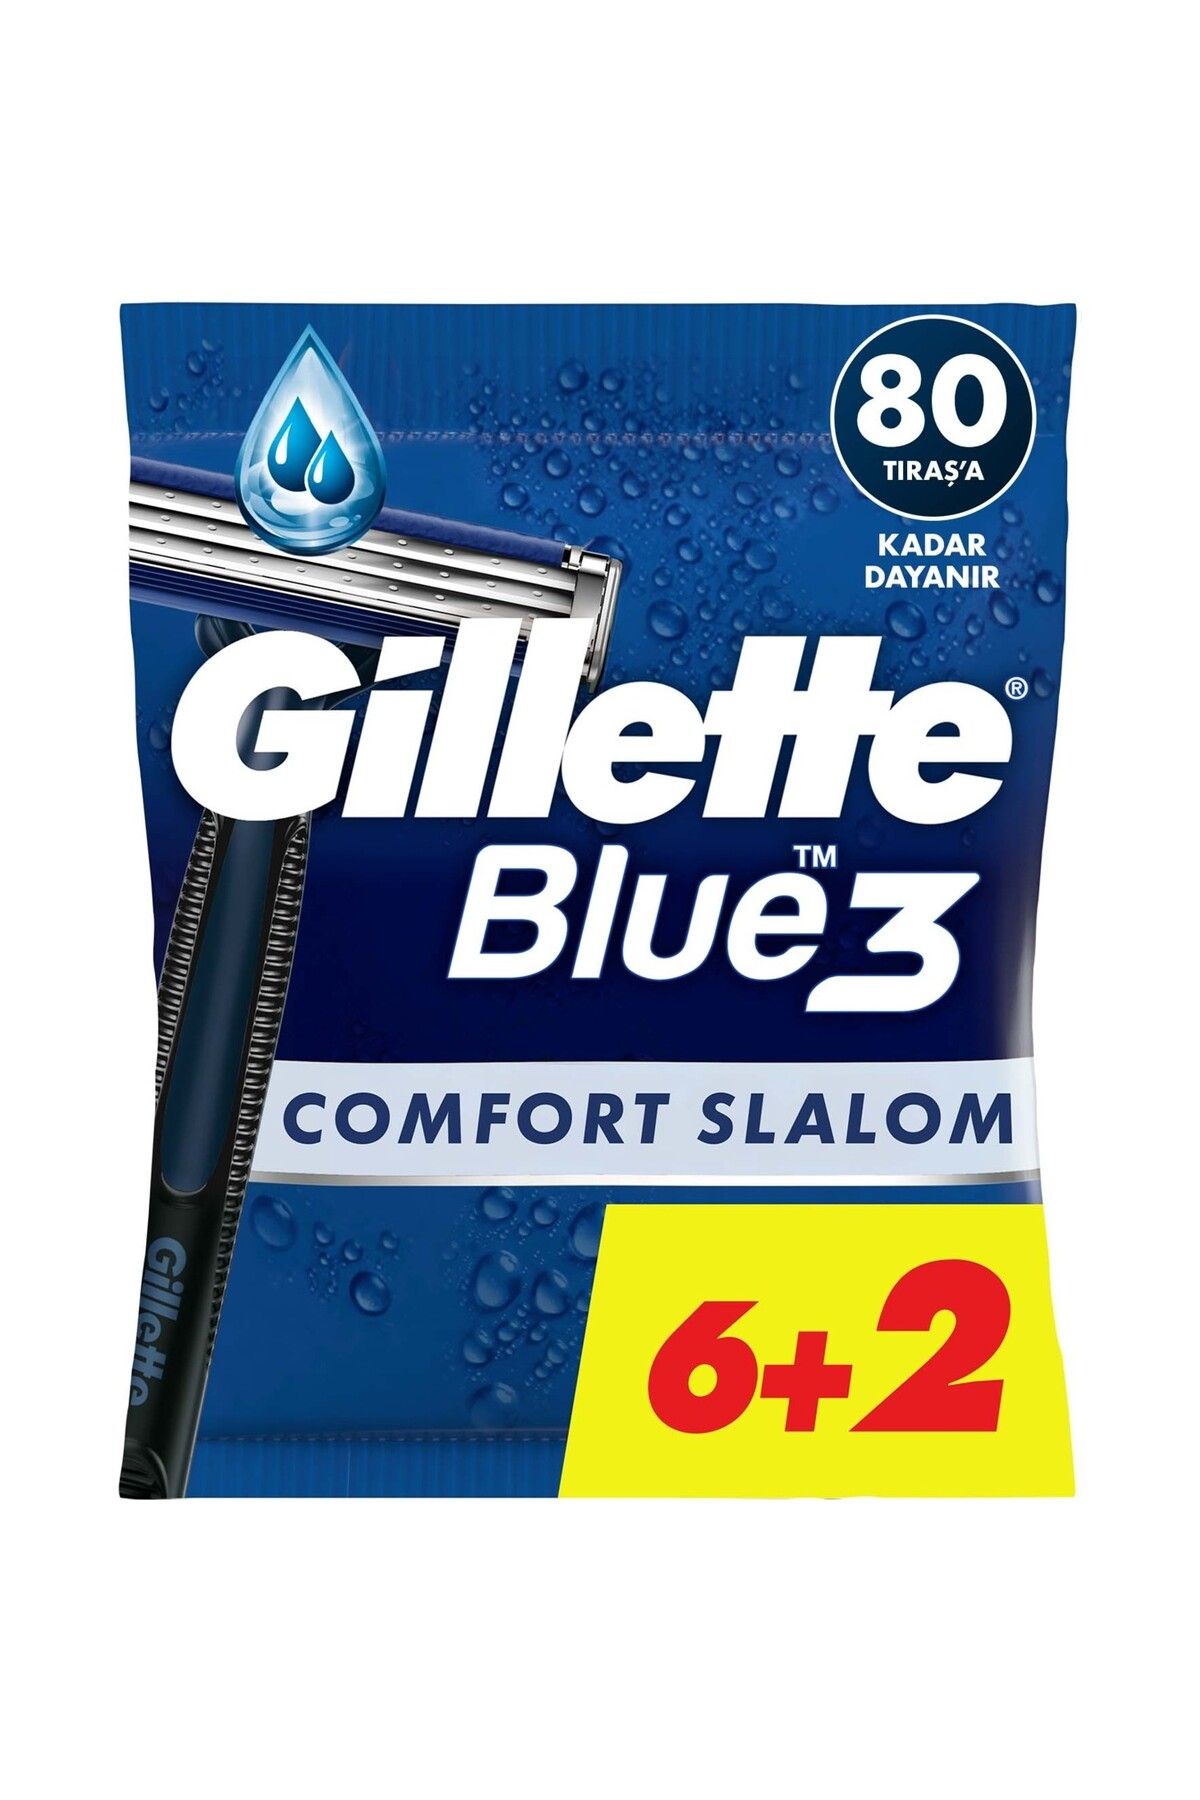 Gillette GİLLETTE BLUE 3 COMFORT SLALOM KULLAN AT TRAŞ BIÇAĞI 8' Lİ